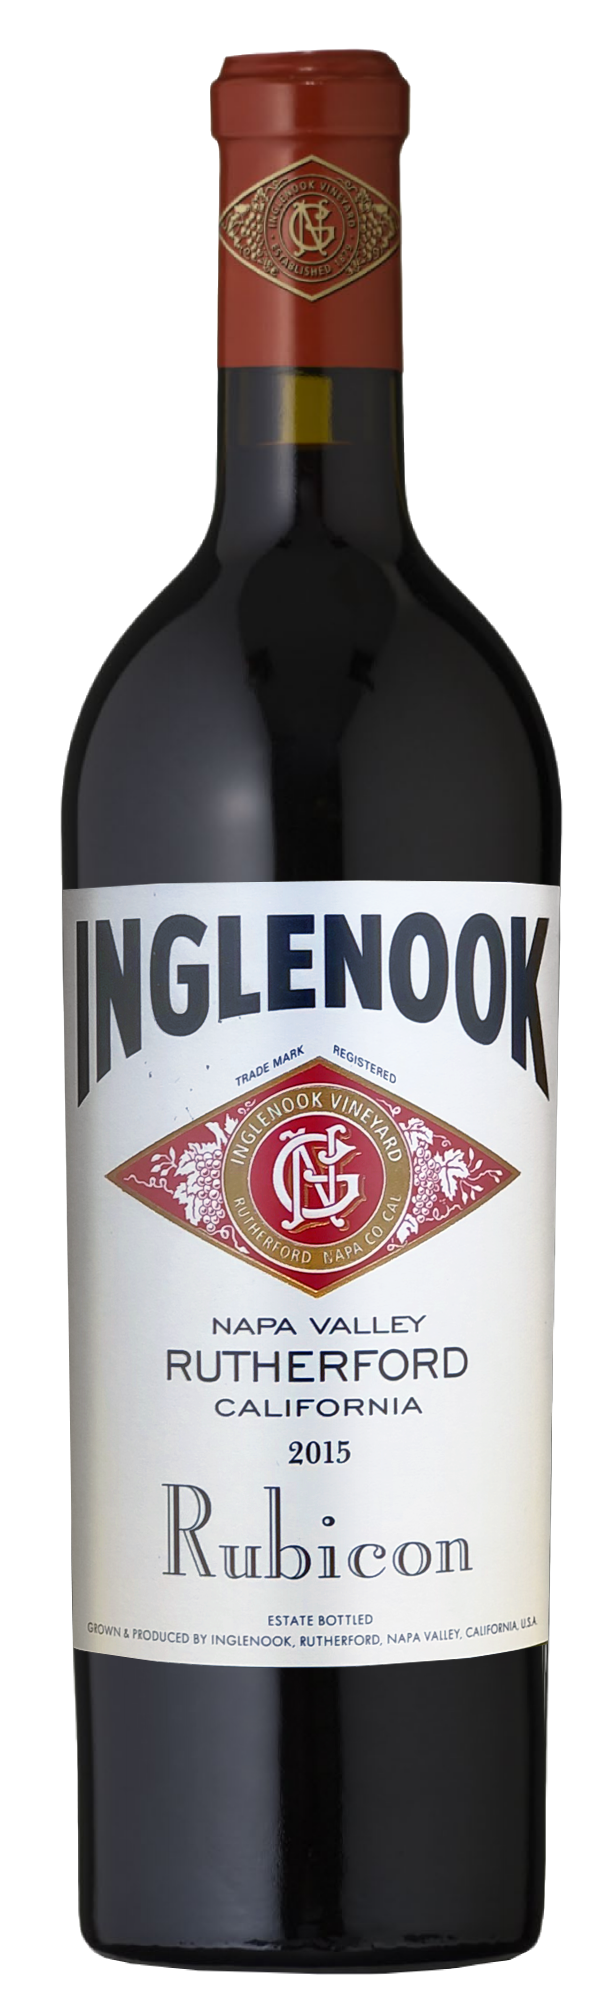 Inglenook Rubicon 2015 - winewine магазин склад